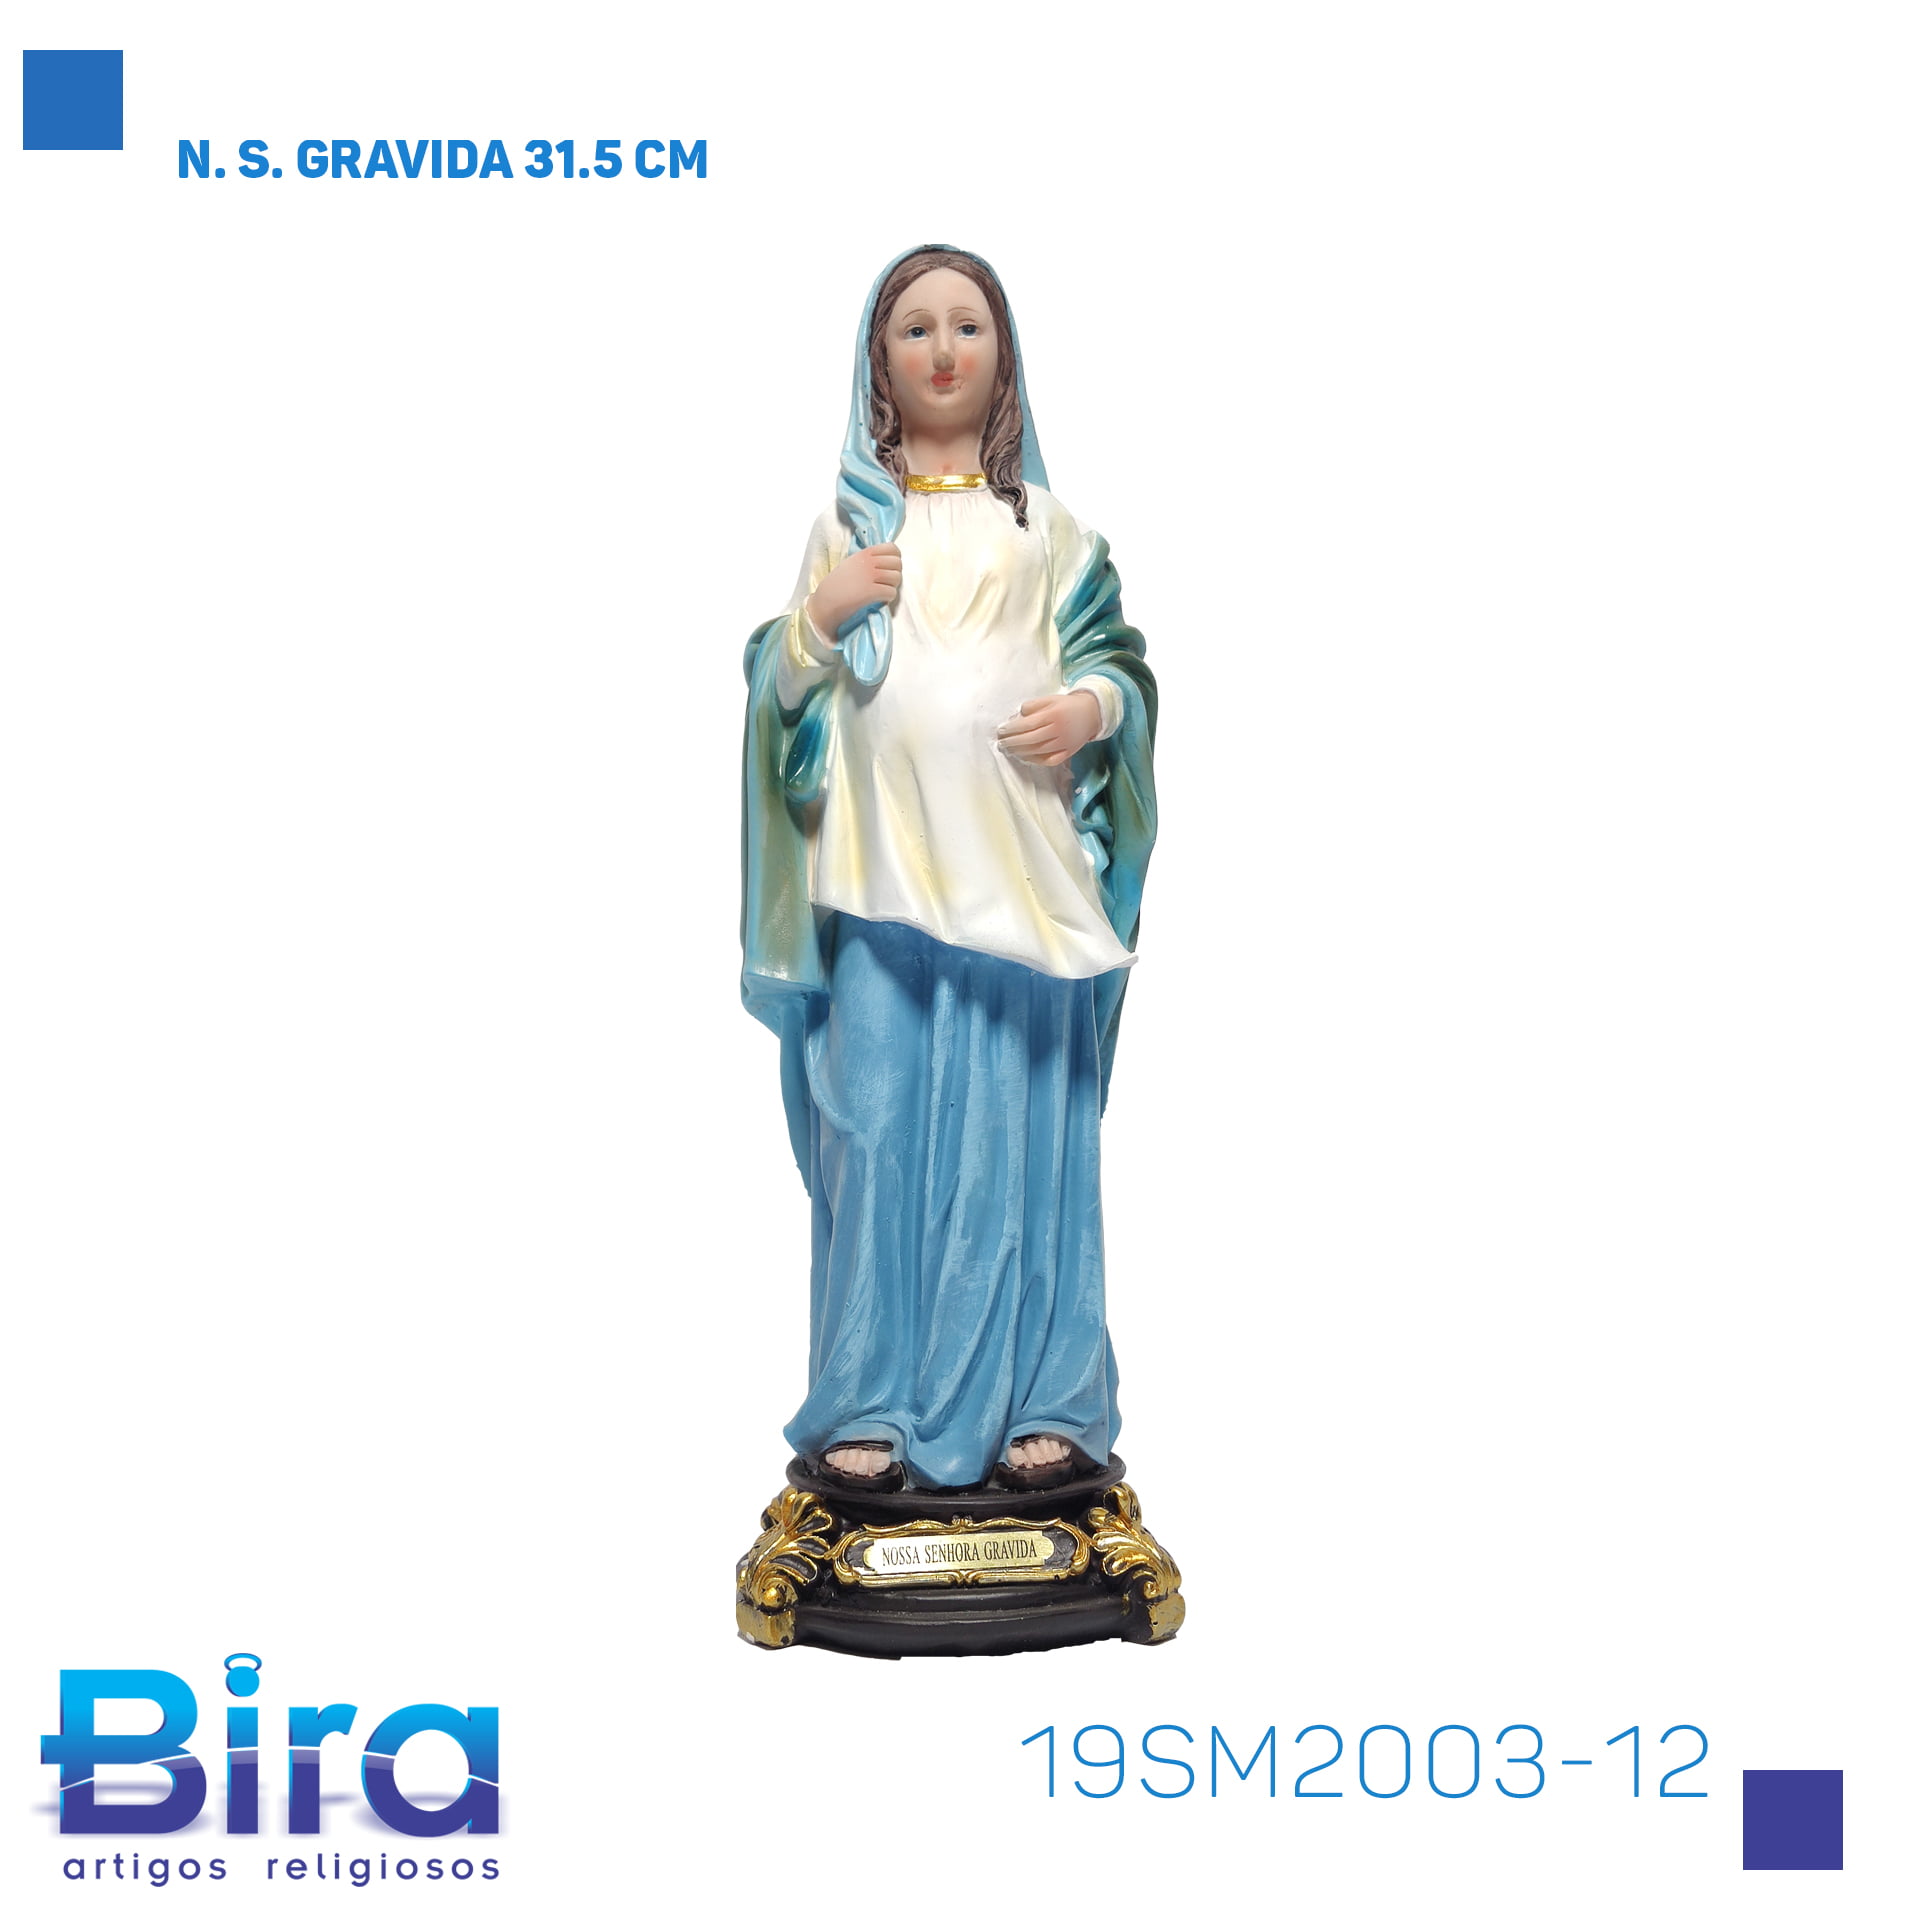 Bira Artigos Religiosos - N. S. GRAVIDA 31.5 CM Cód. 19SM2003-12